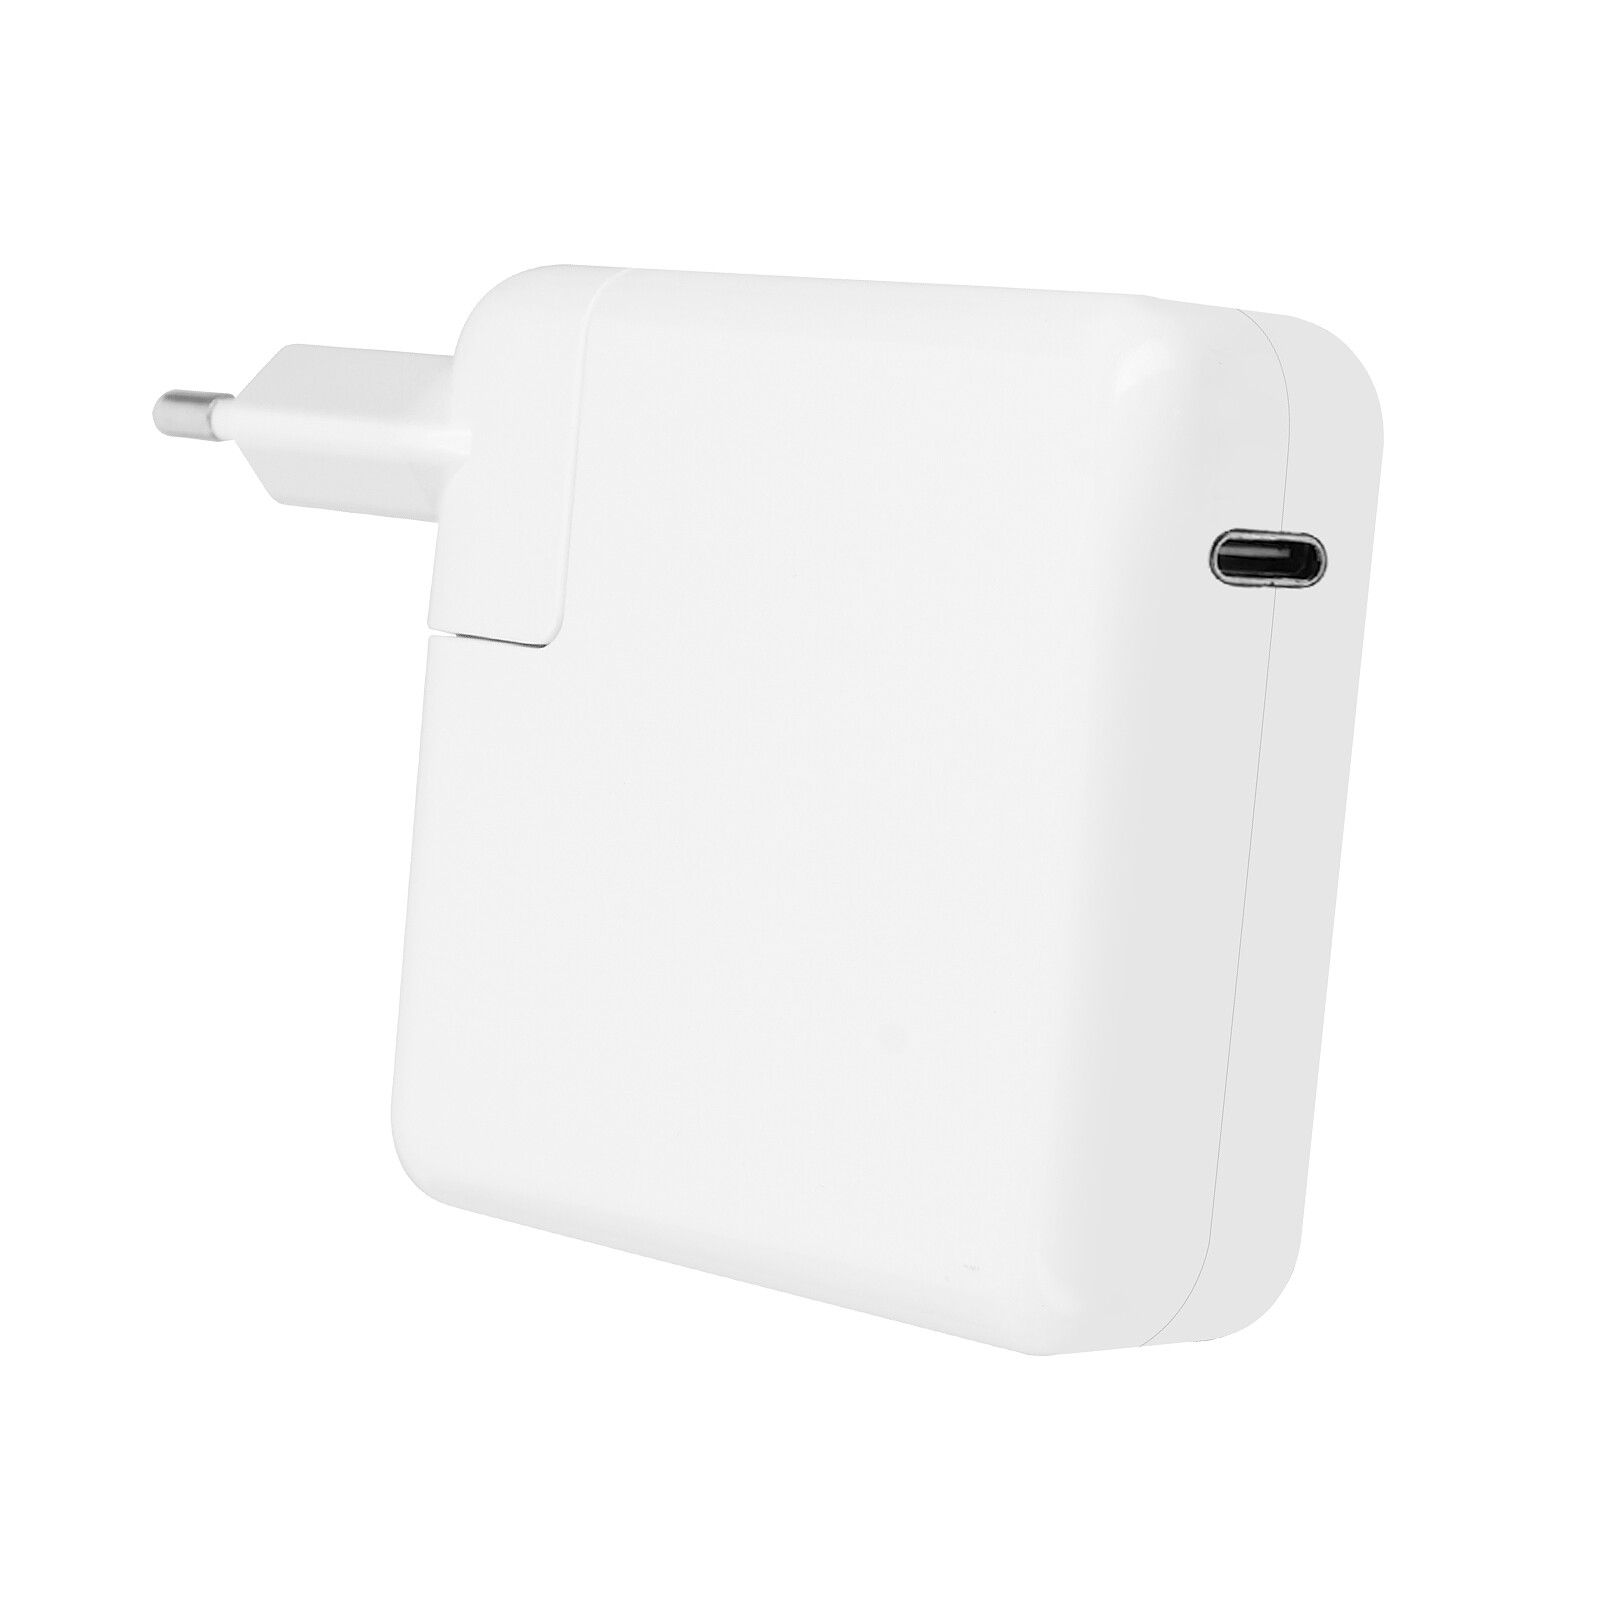 Chargeur Macbook Magsafe 2 Magnétique Charge Rapide 60W Indicateur